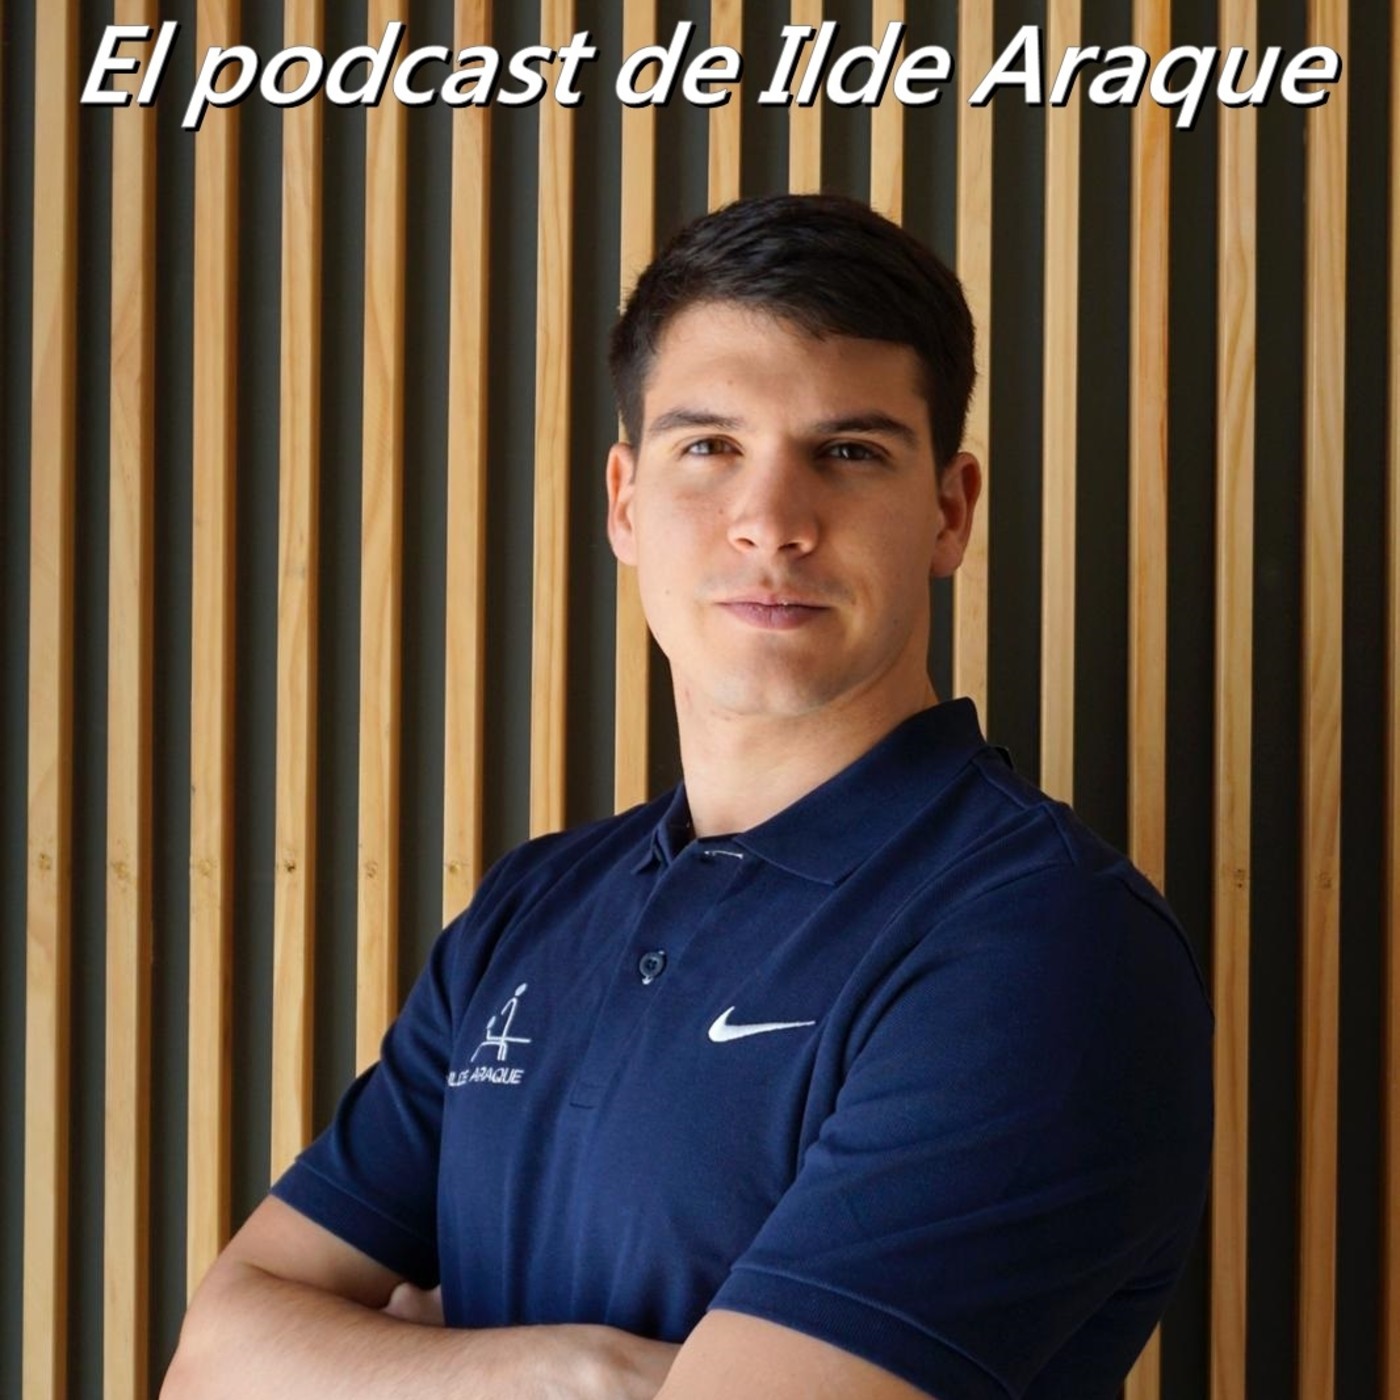 El Podcast de Ilde Araque